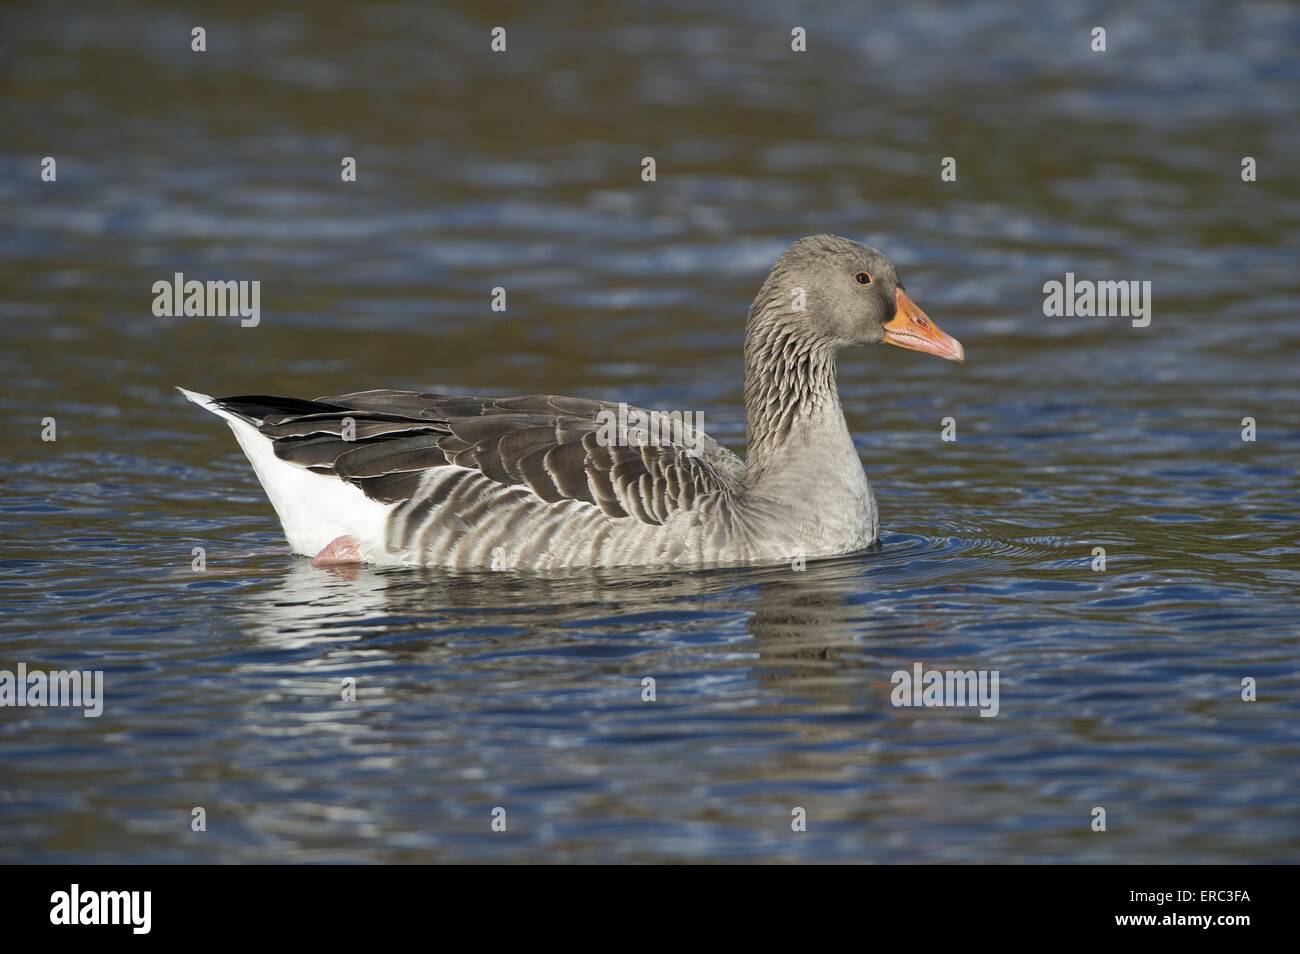 greylag goose Stock Photo